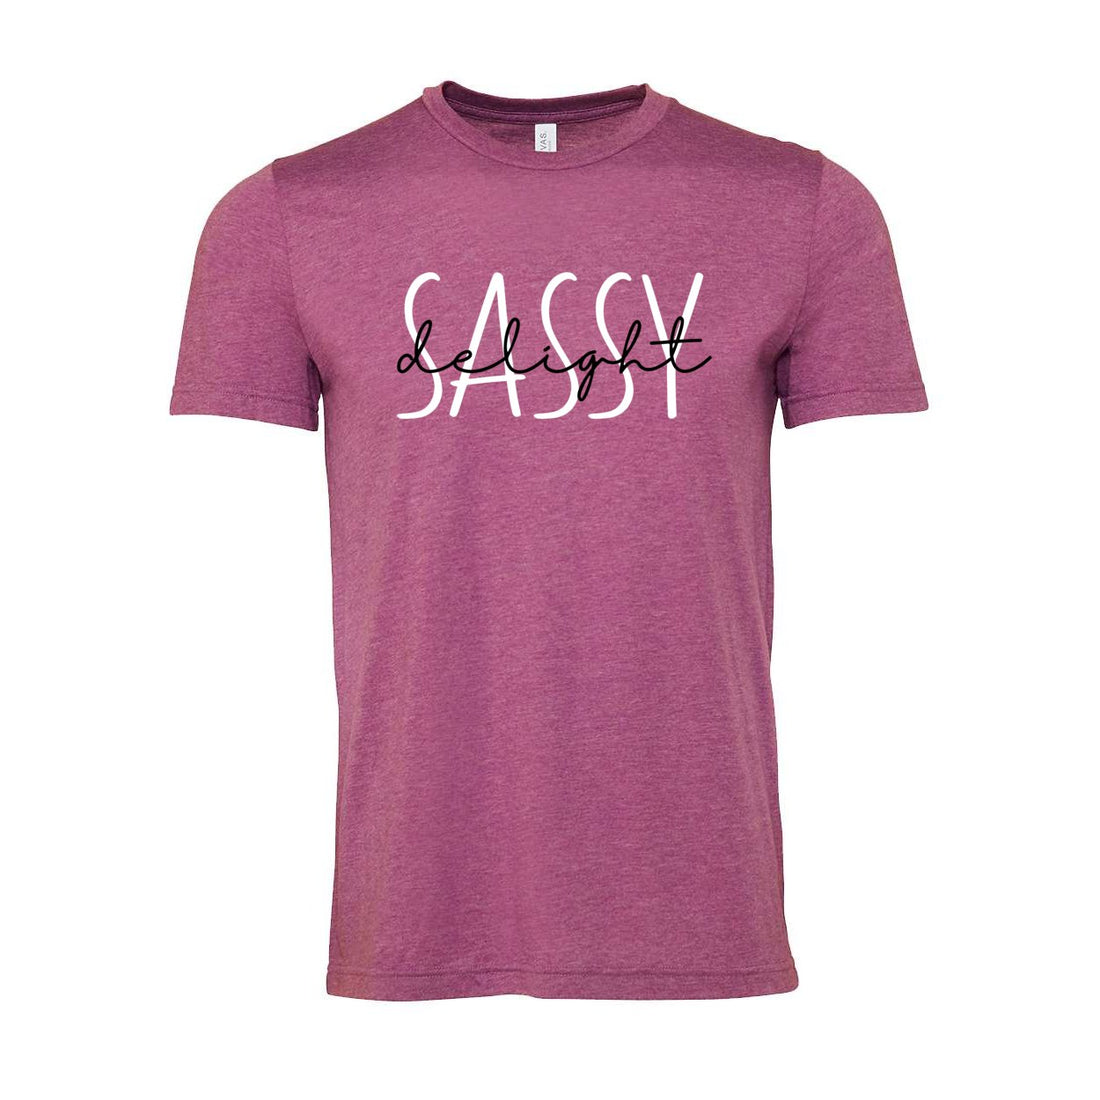 Sassy Delight Short Sleeve Jersey Tee - T-Shirts - Positively Sassy - Sassy Delight Short Sleeve Jersey Tee